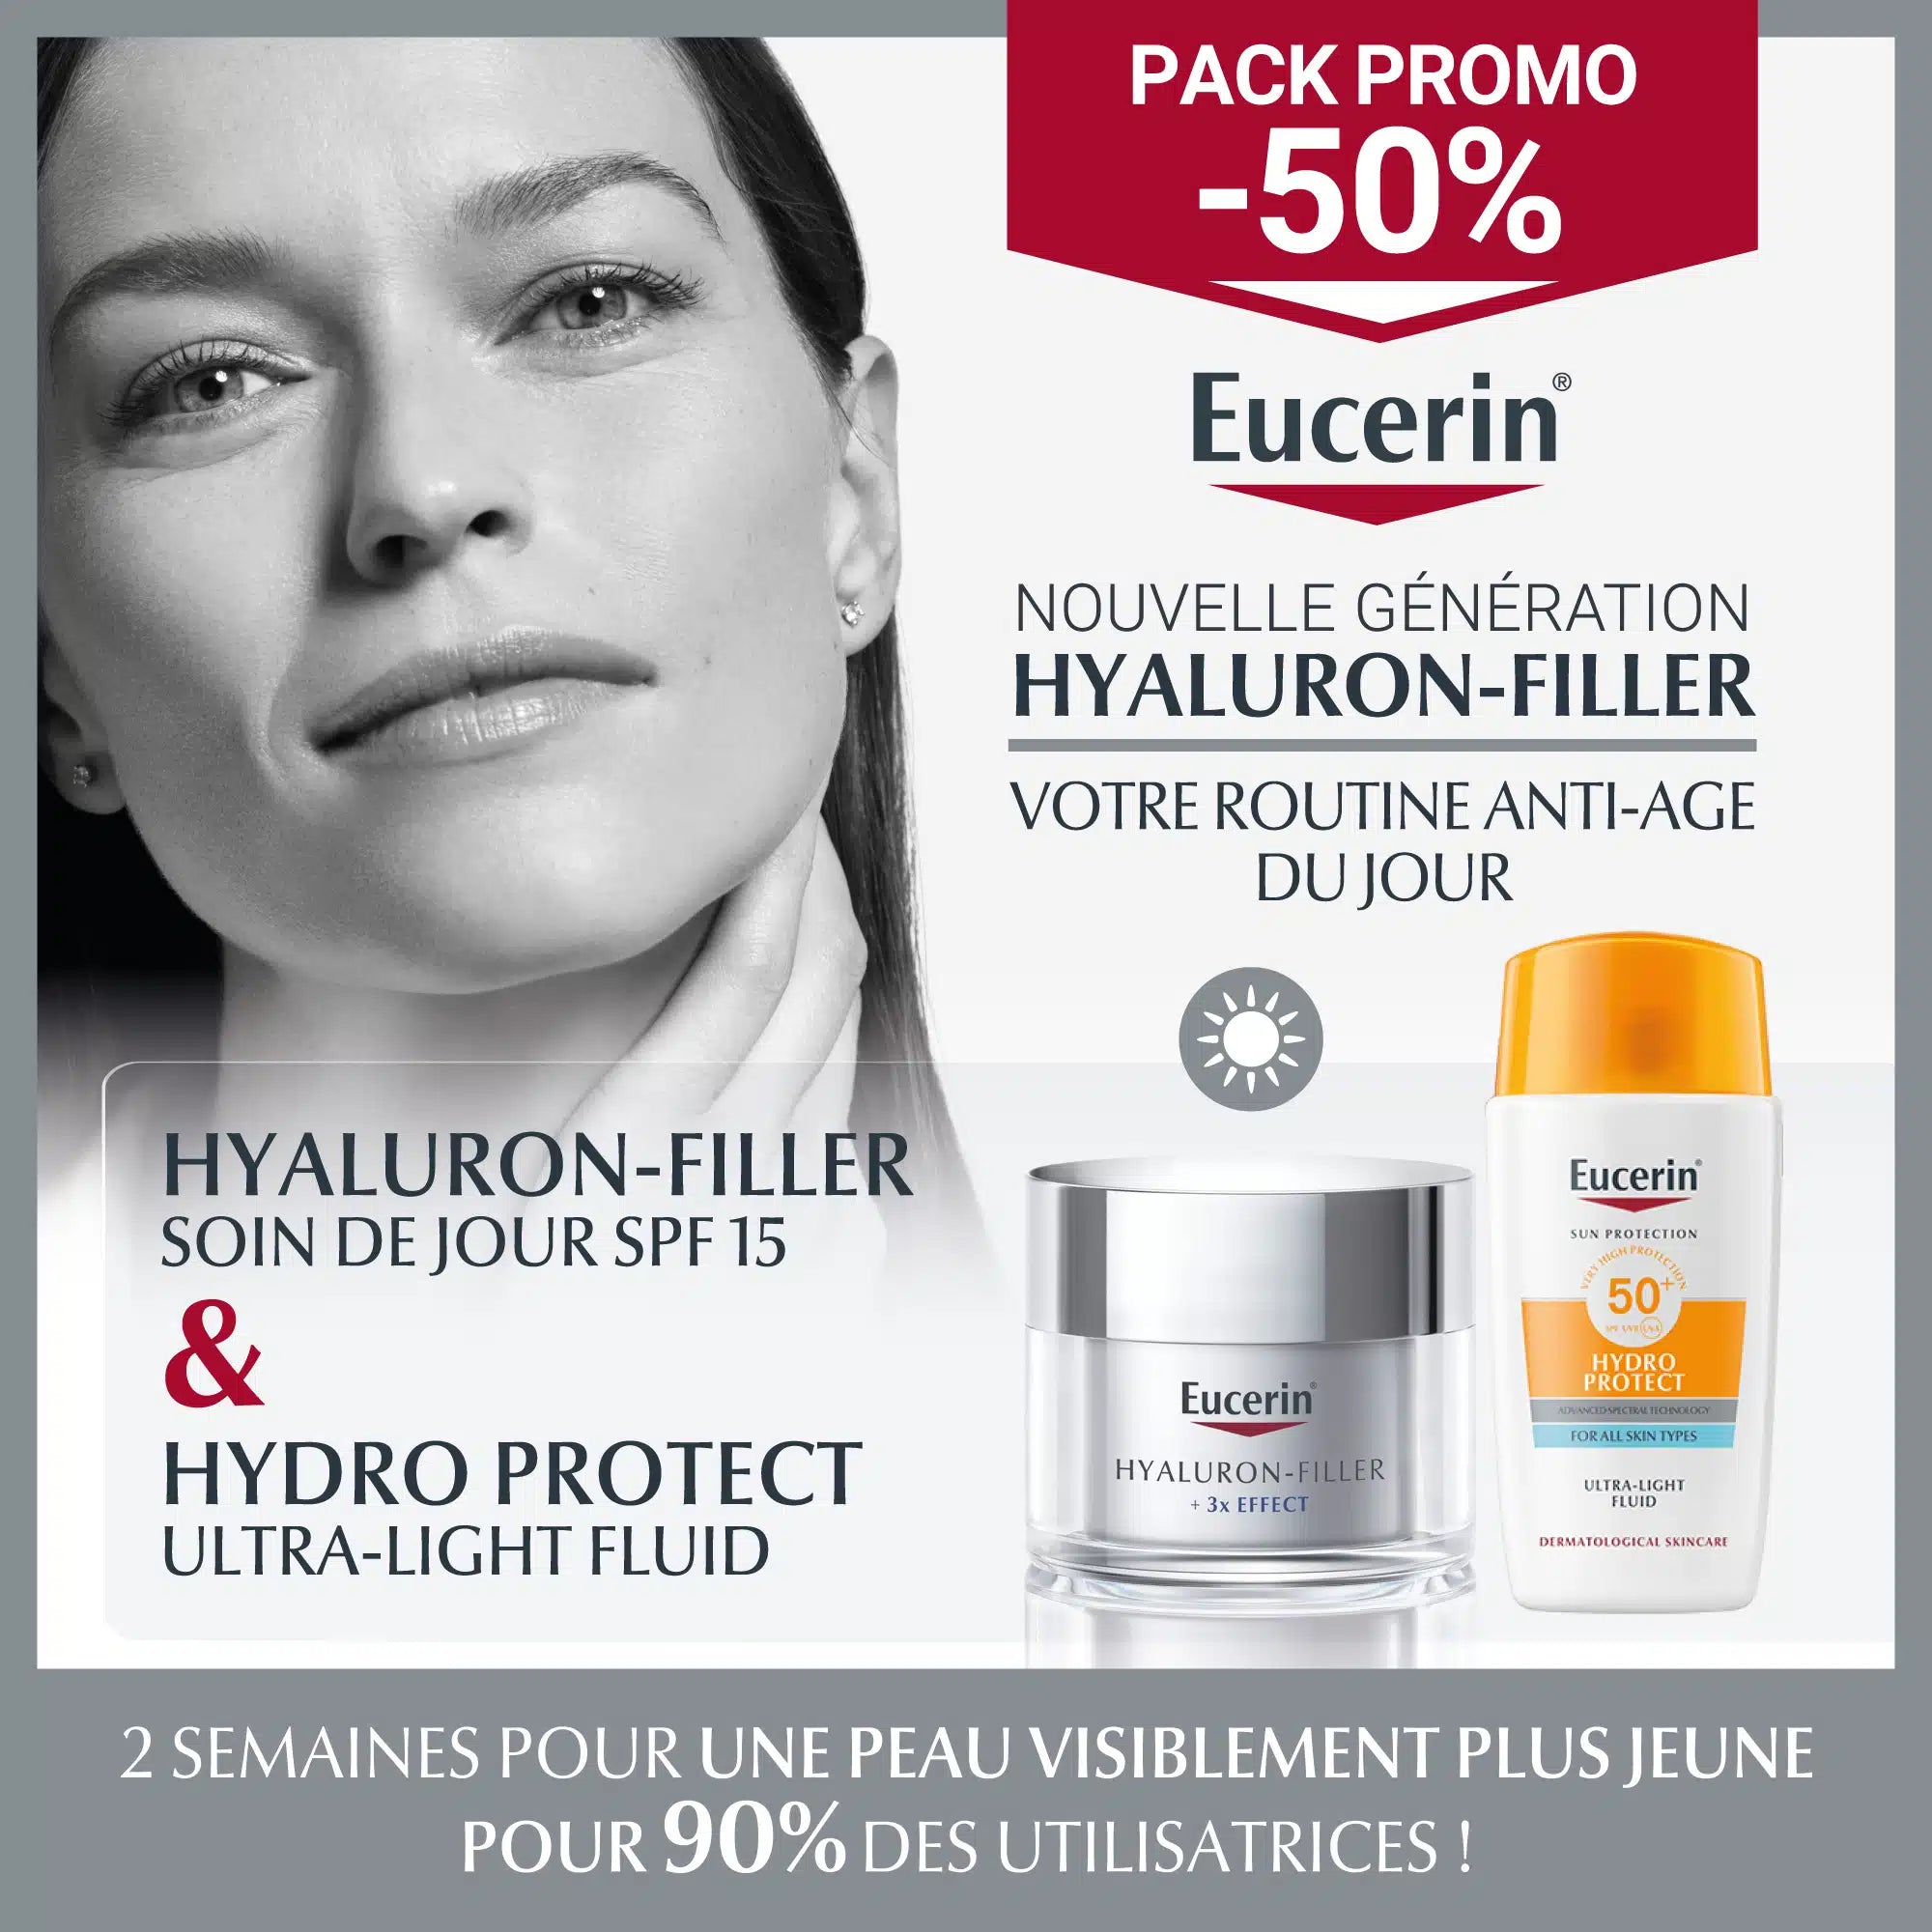 Eucerin Hyaluron filler +3X Effect Soin De Jour 50ml + Ecran Hydro